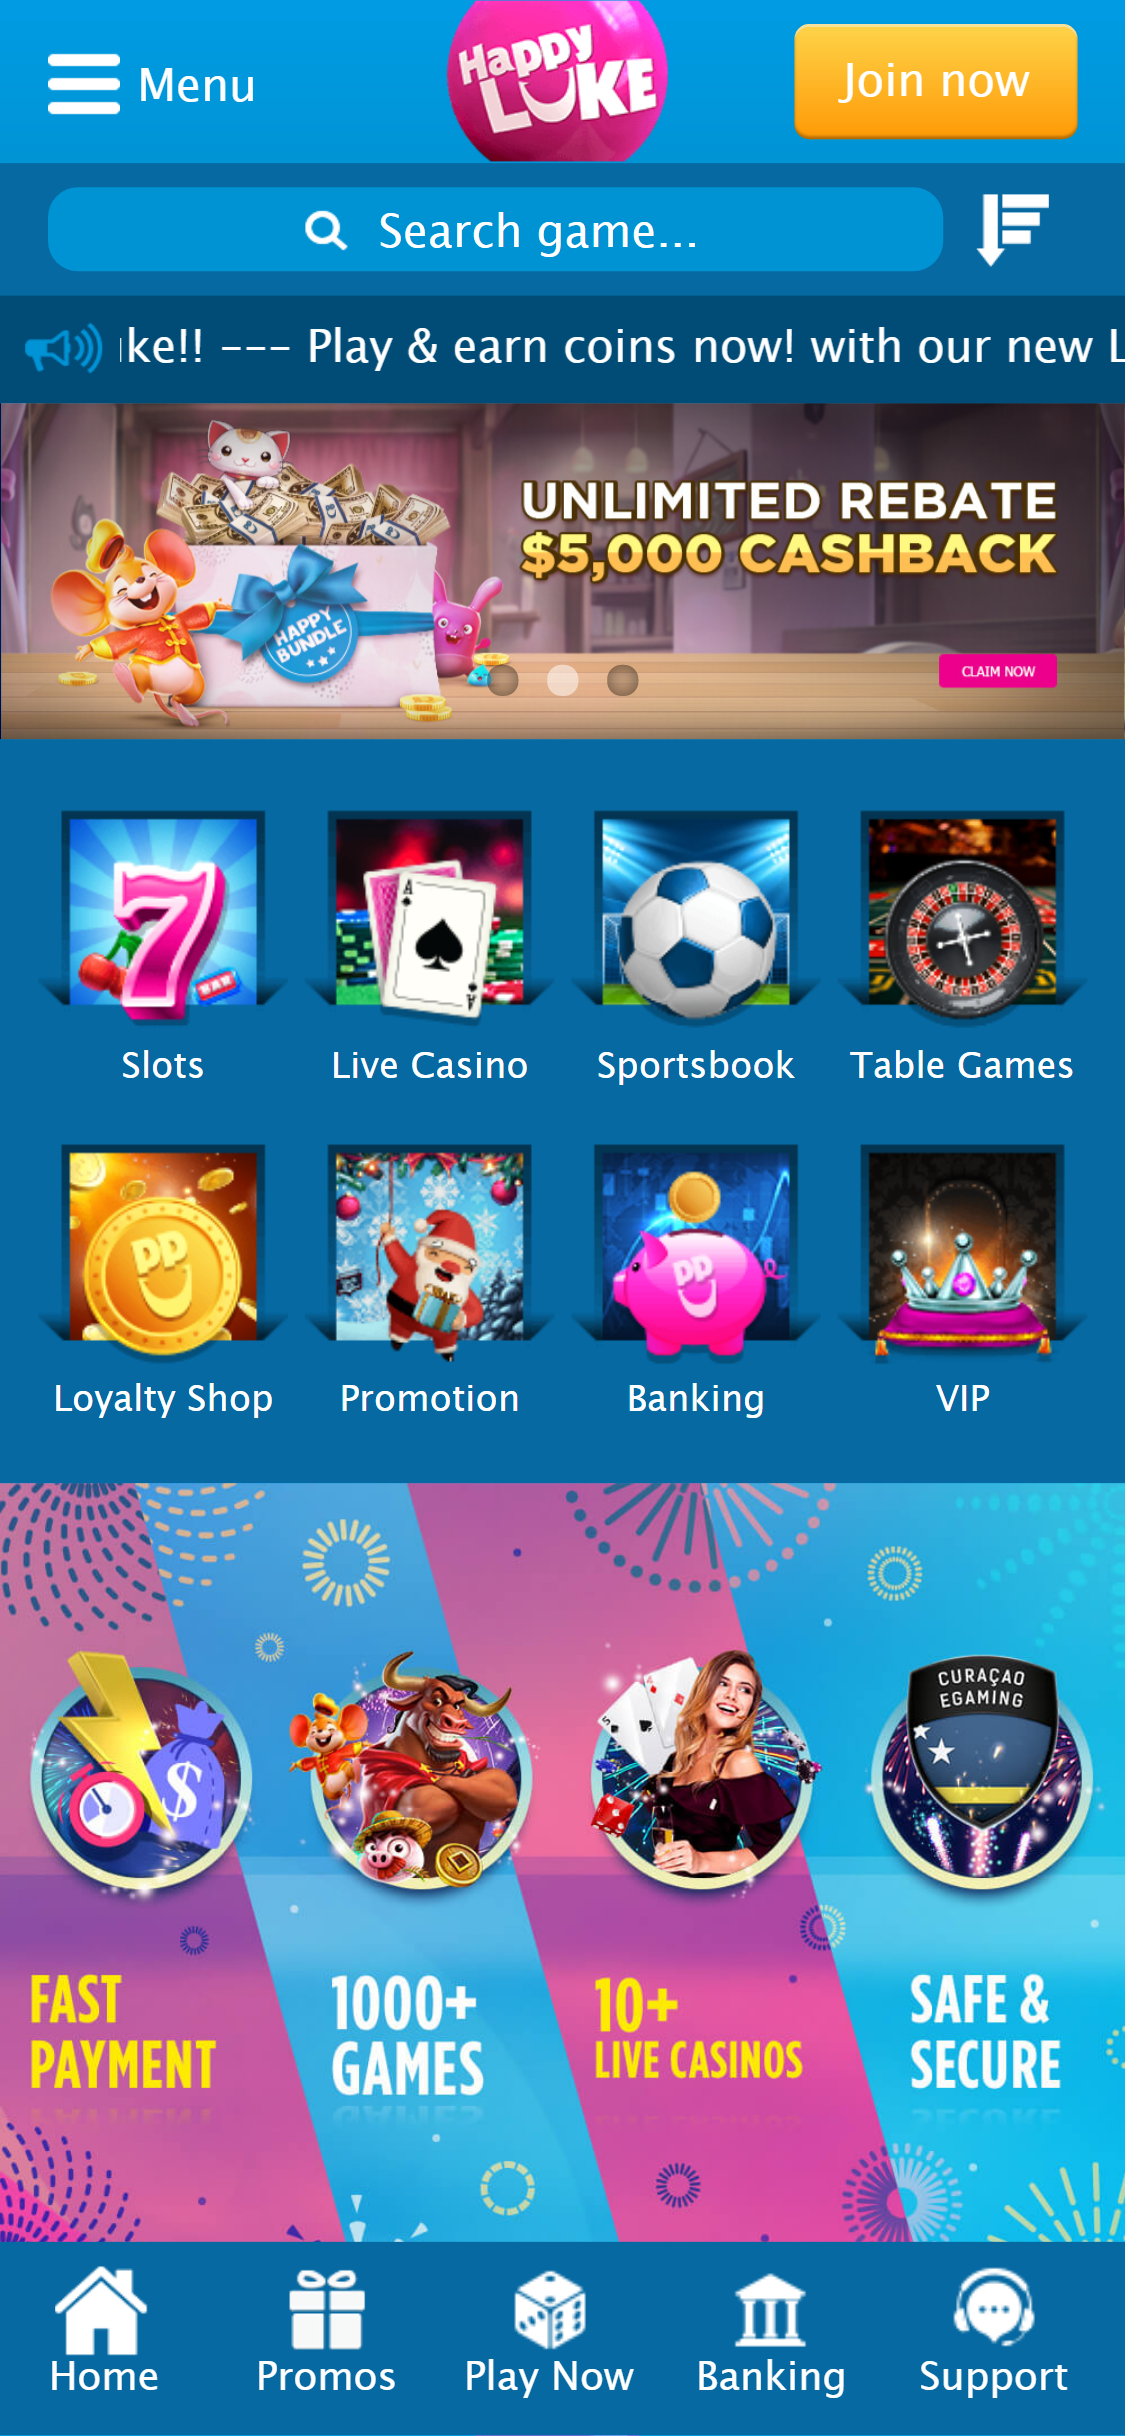 HappyLuke Casino Mobile App Review